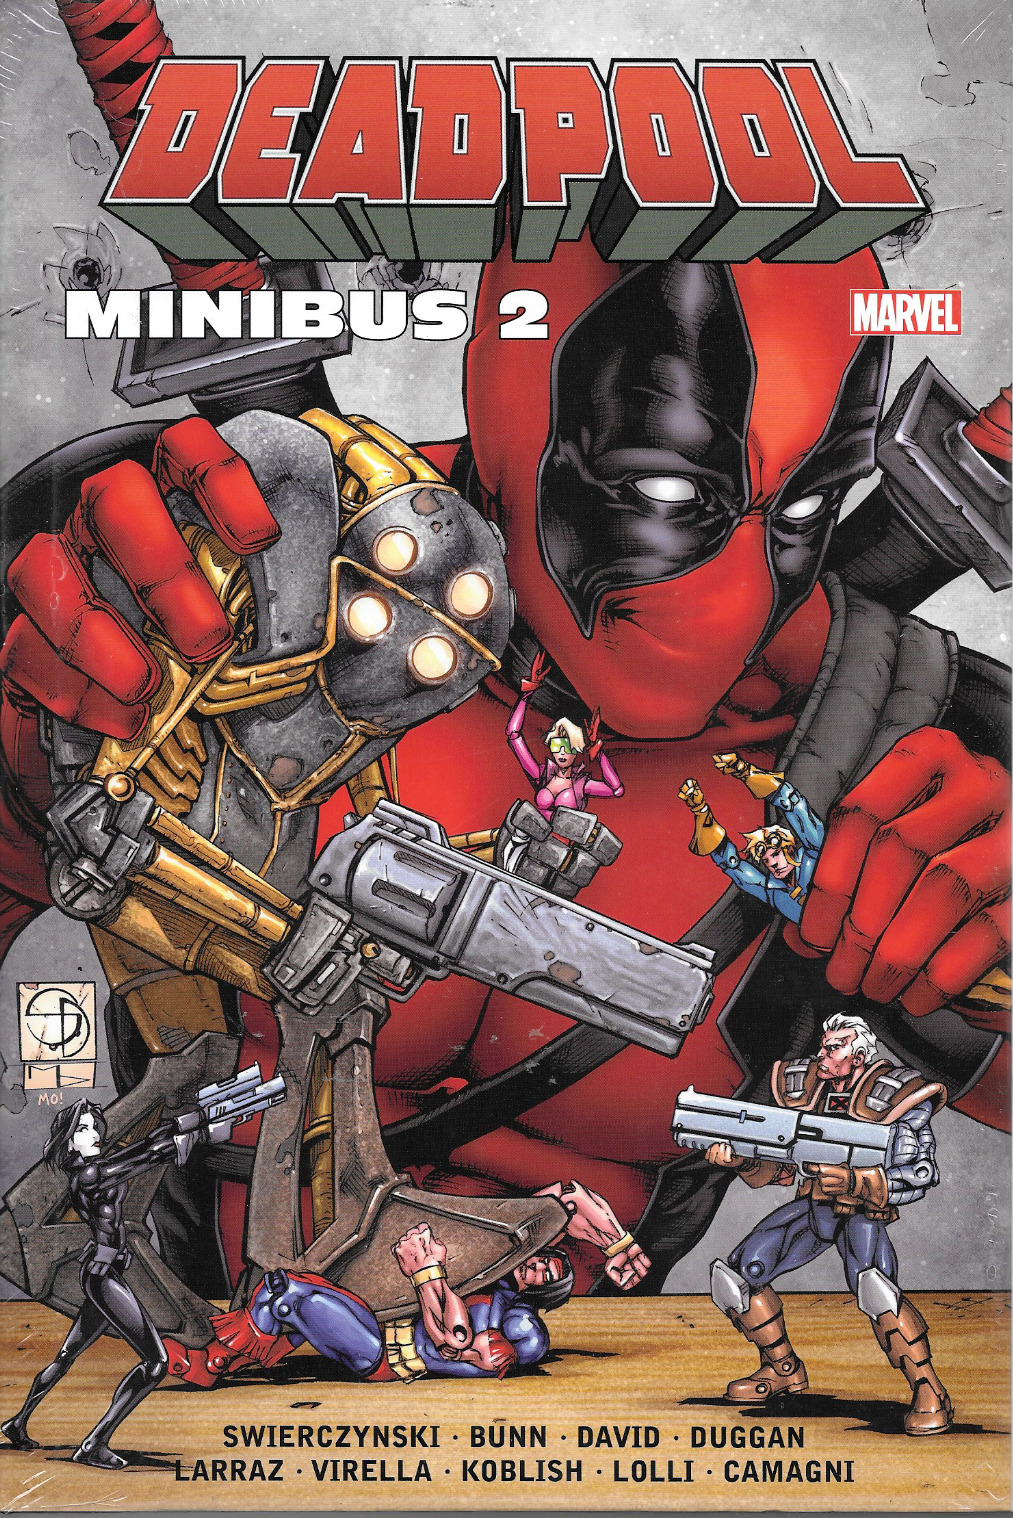 Deadpool Minibus 2 by Duggan, Bunn, David & more 2016, HC Marvel Comics OOP